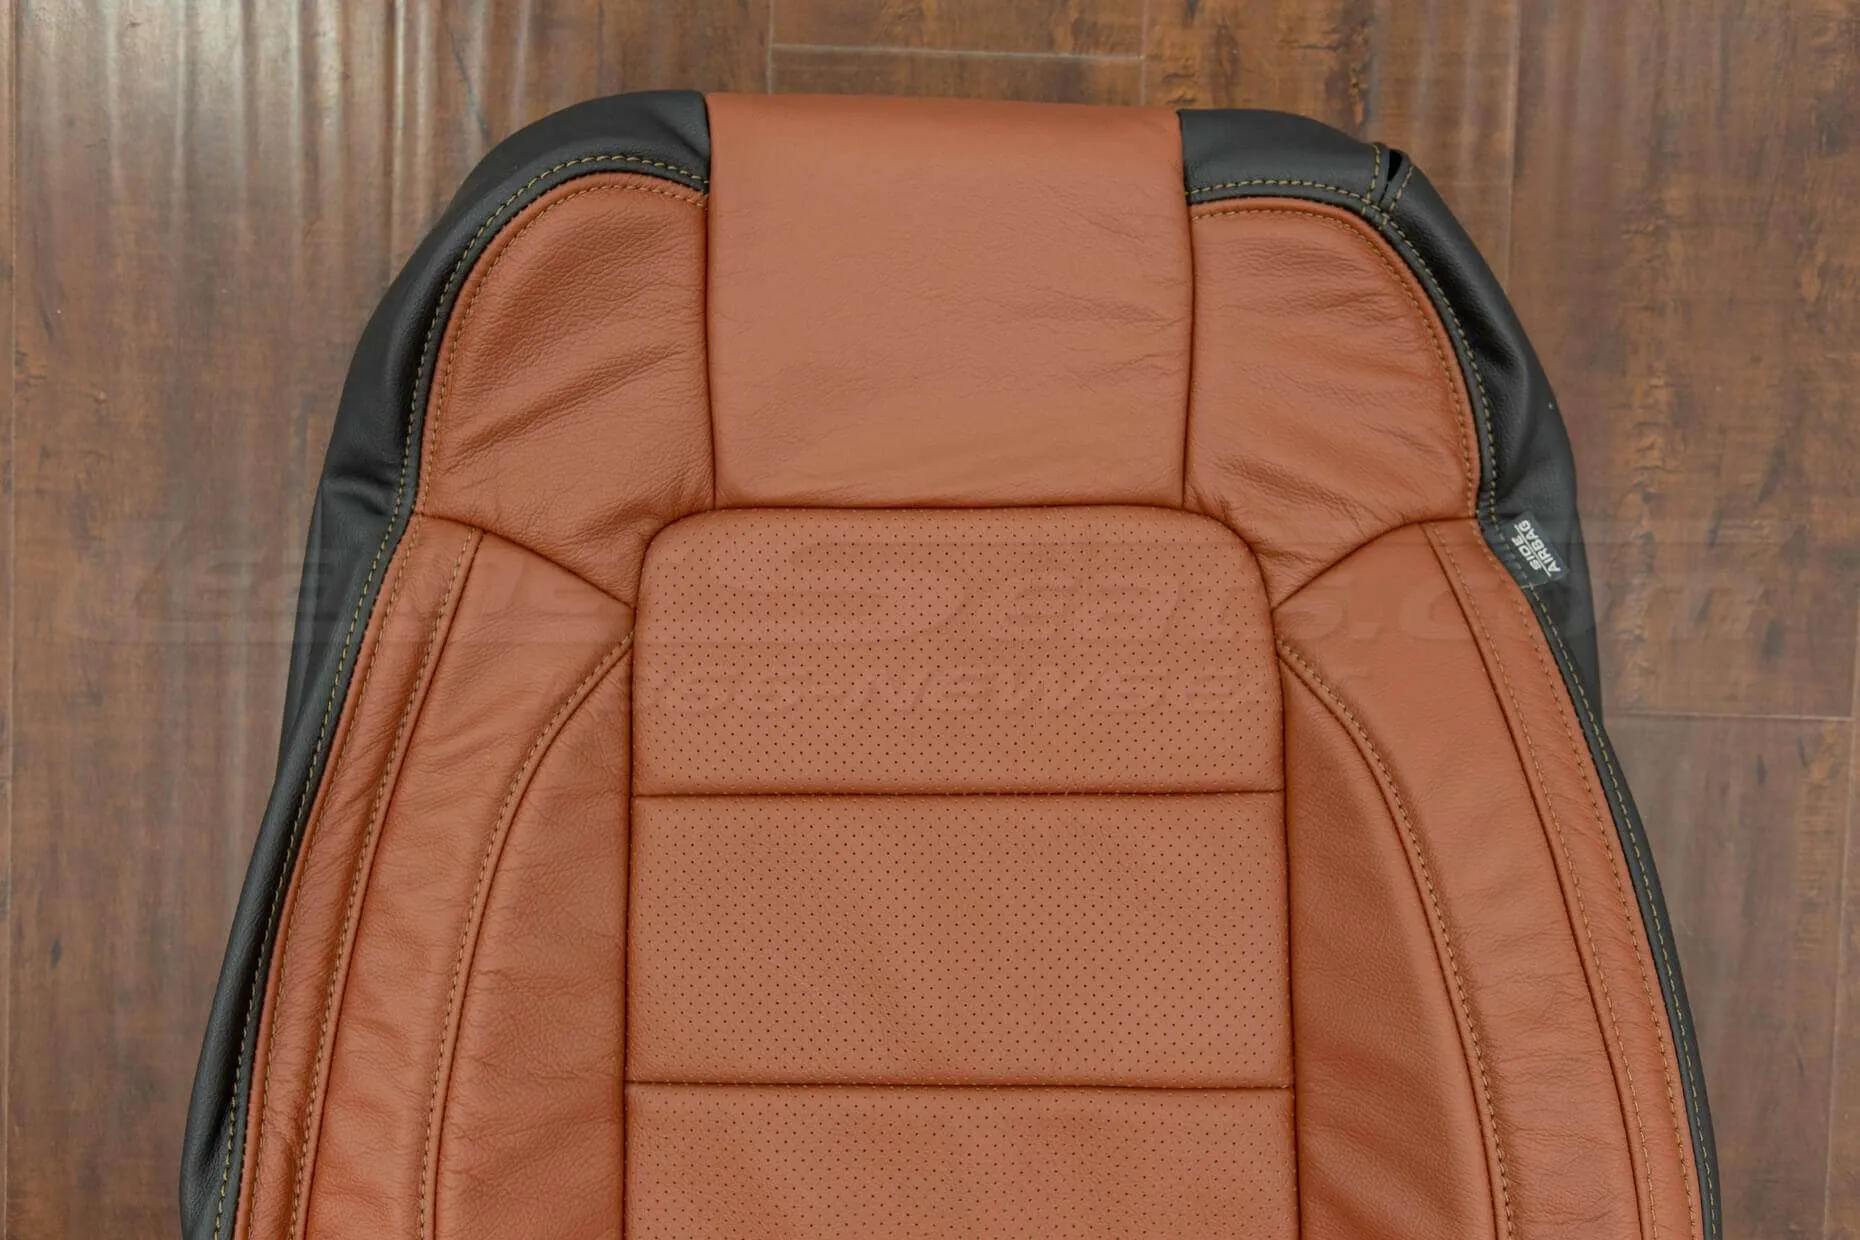 Ford Mustang upholstery kit -Mitt Brown - Front backrest upper section